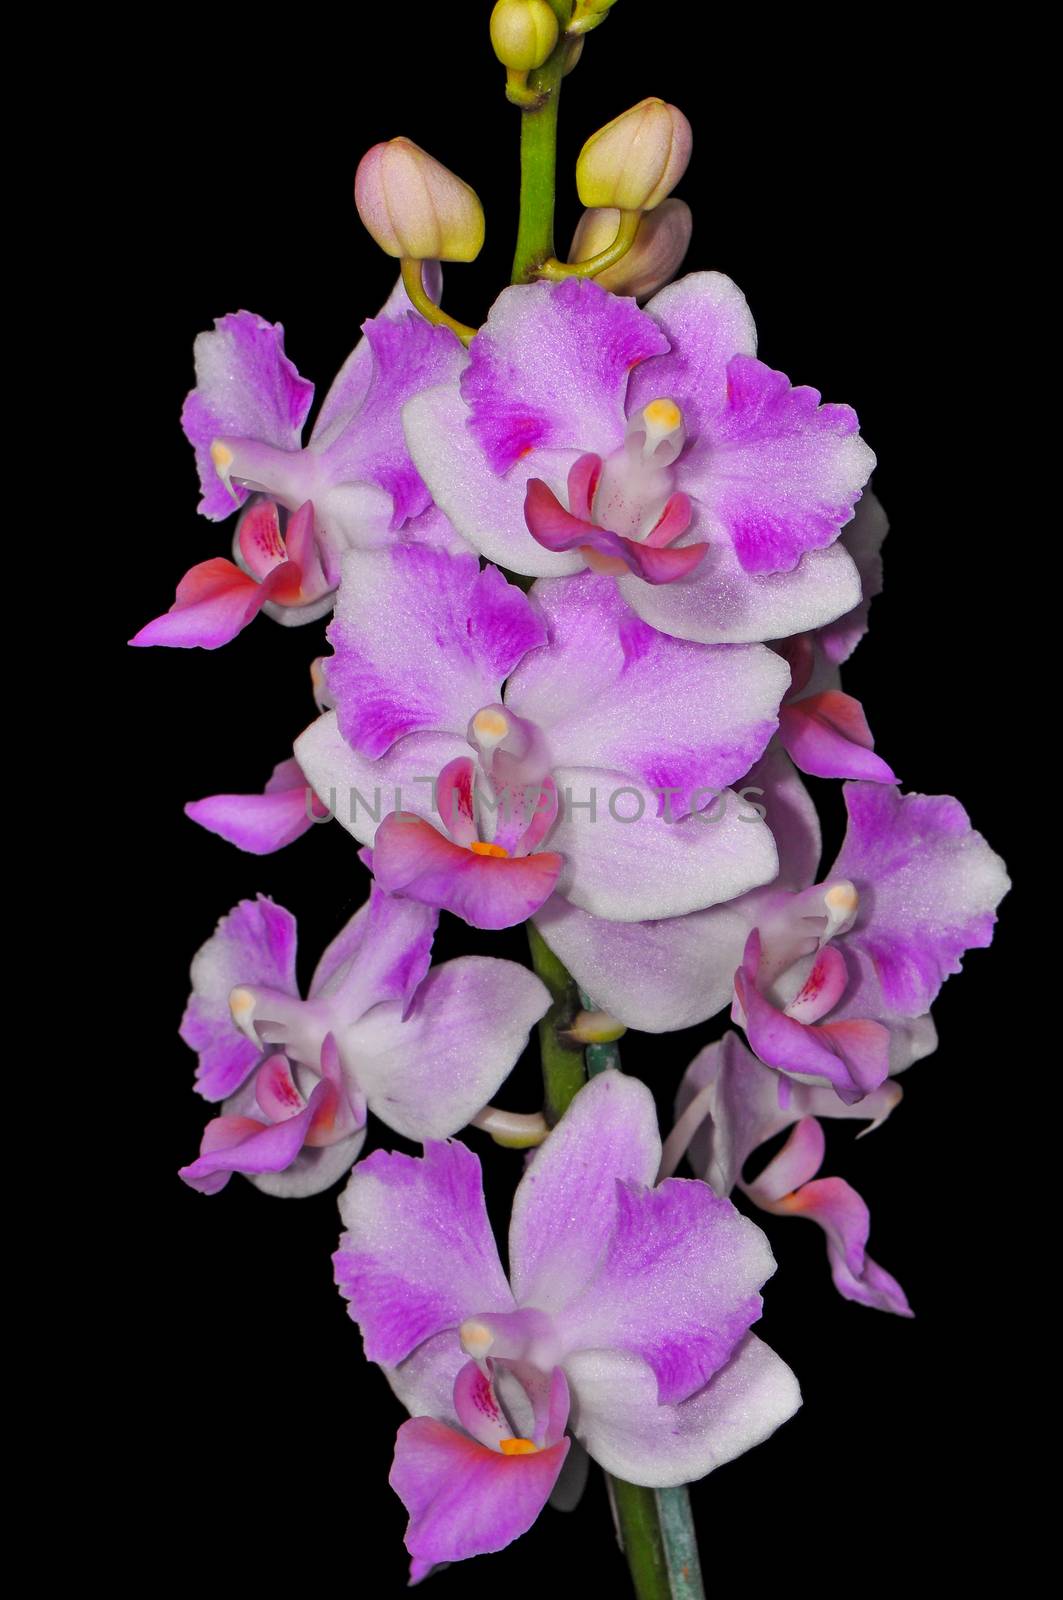 Inflorescence of peloric purple orchid, Phalaenopsis hybrid